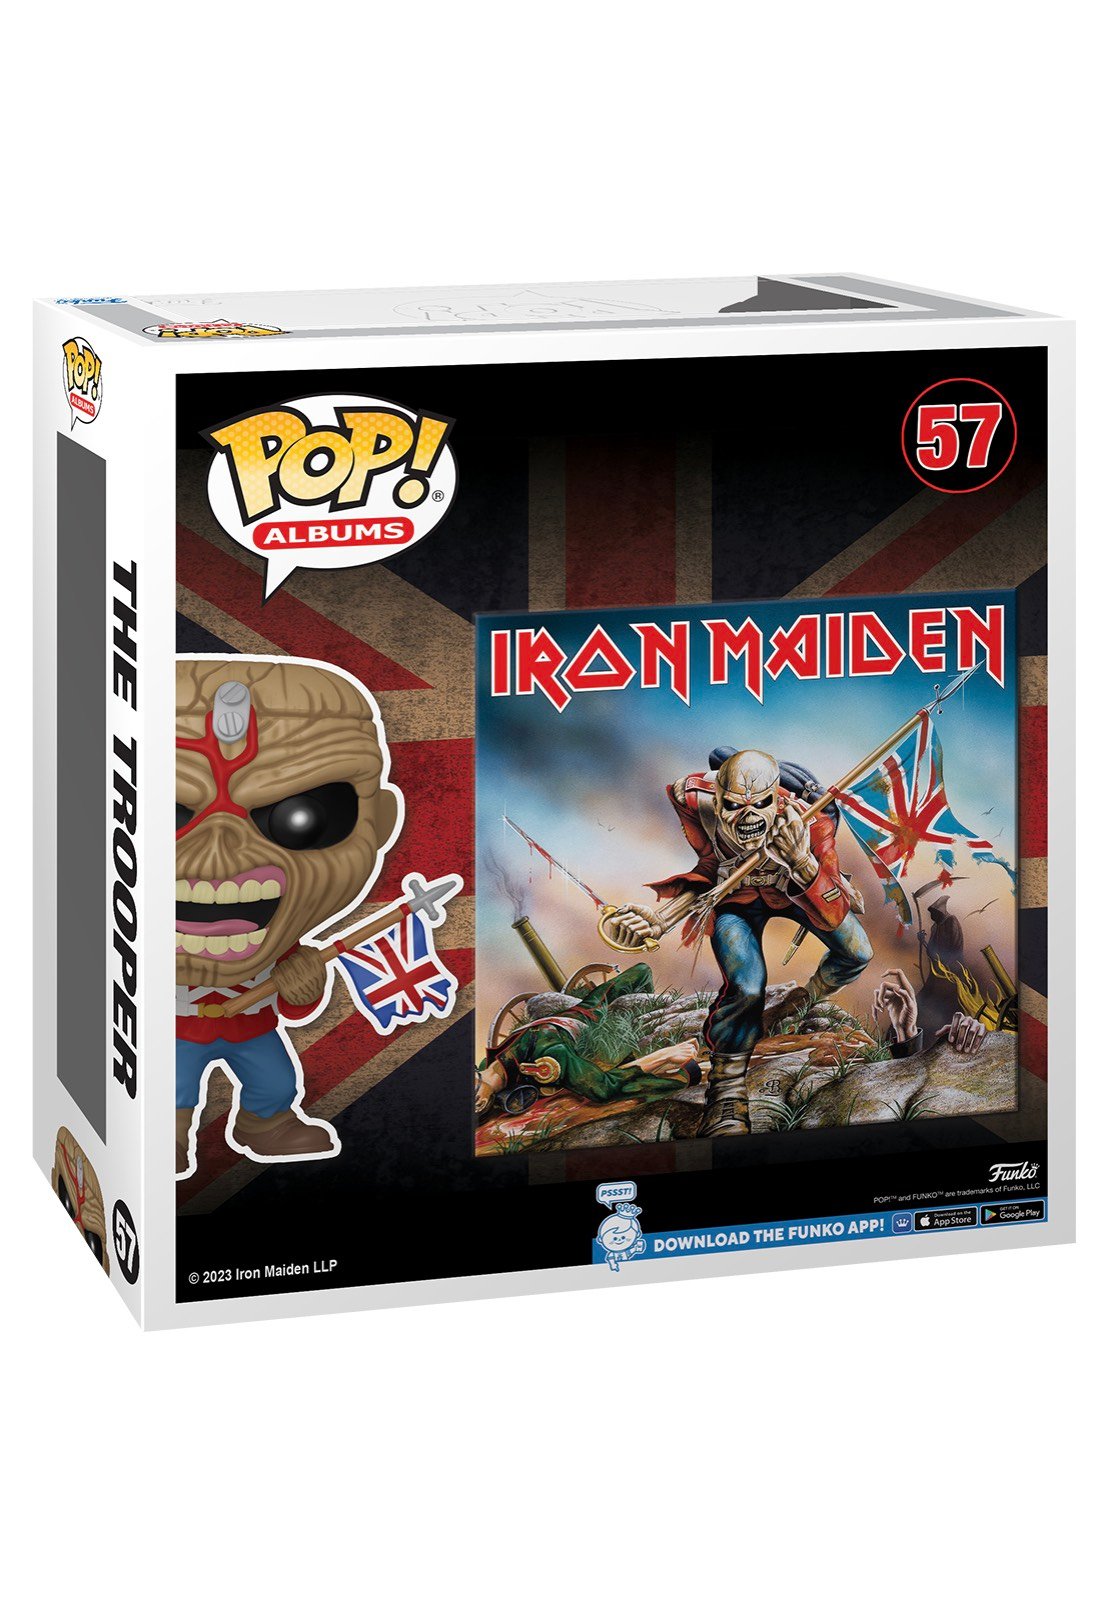 Iron Maiden - The Trooper POP! Vinyl Albums - Funko Pop